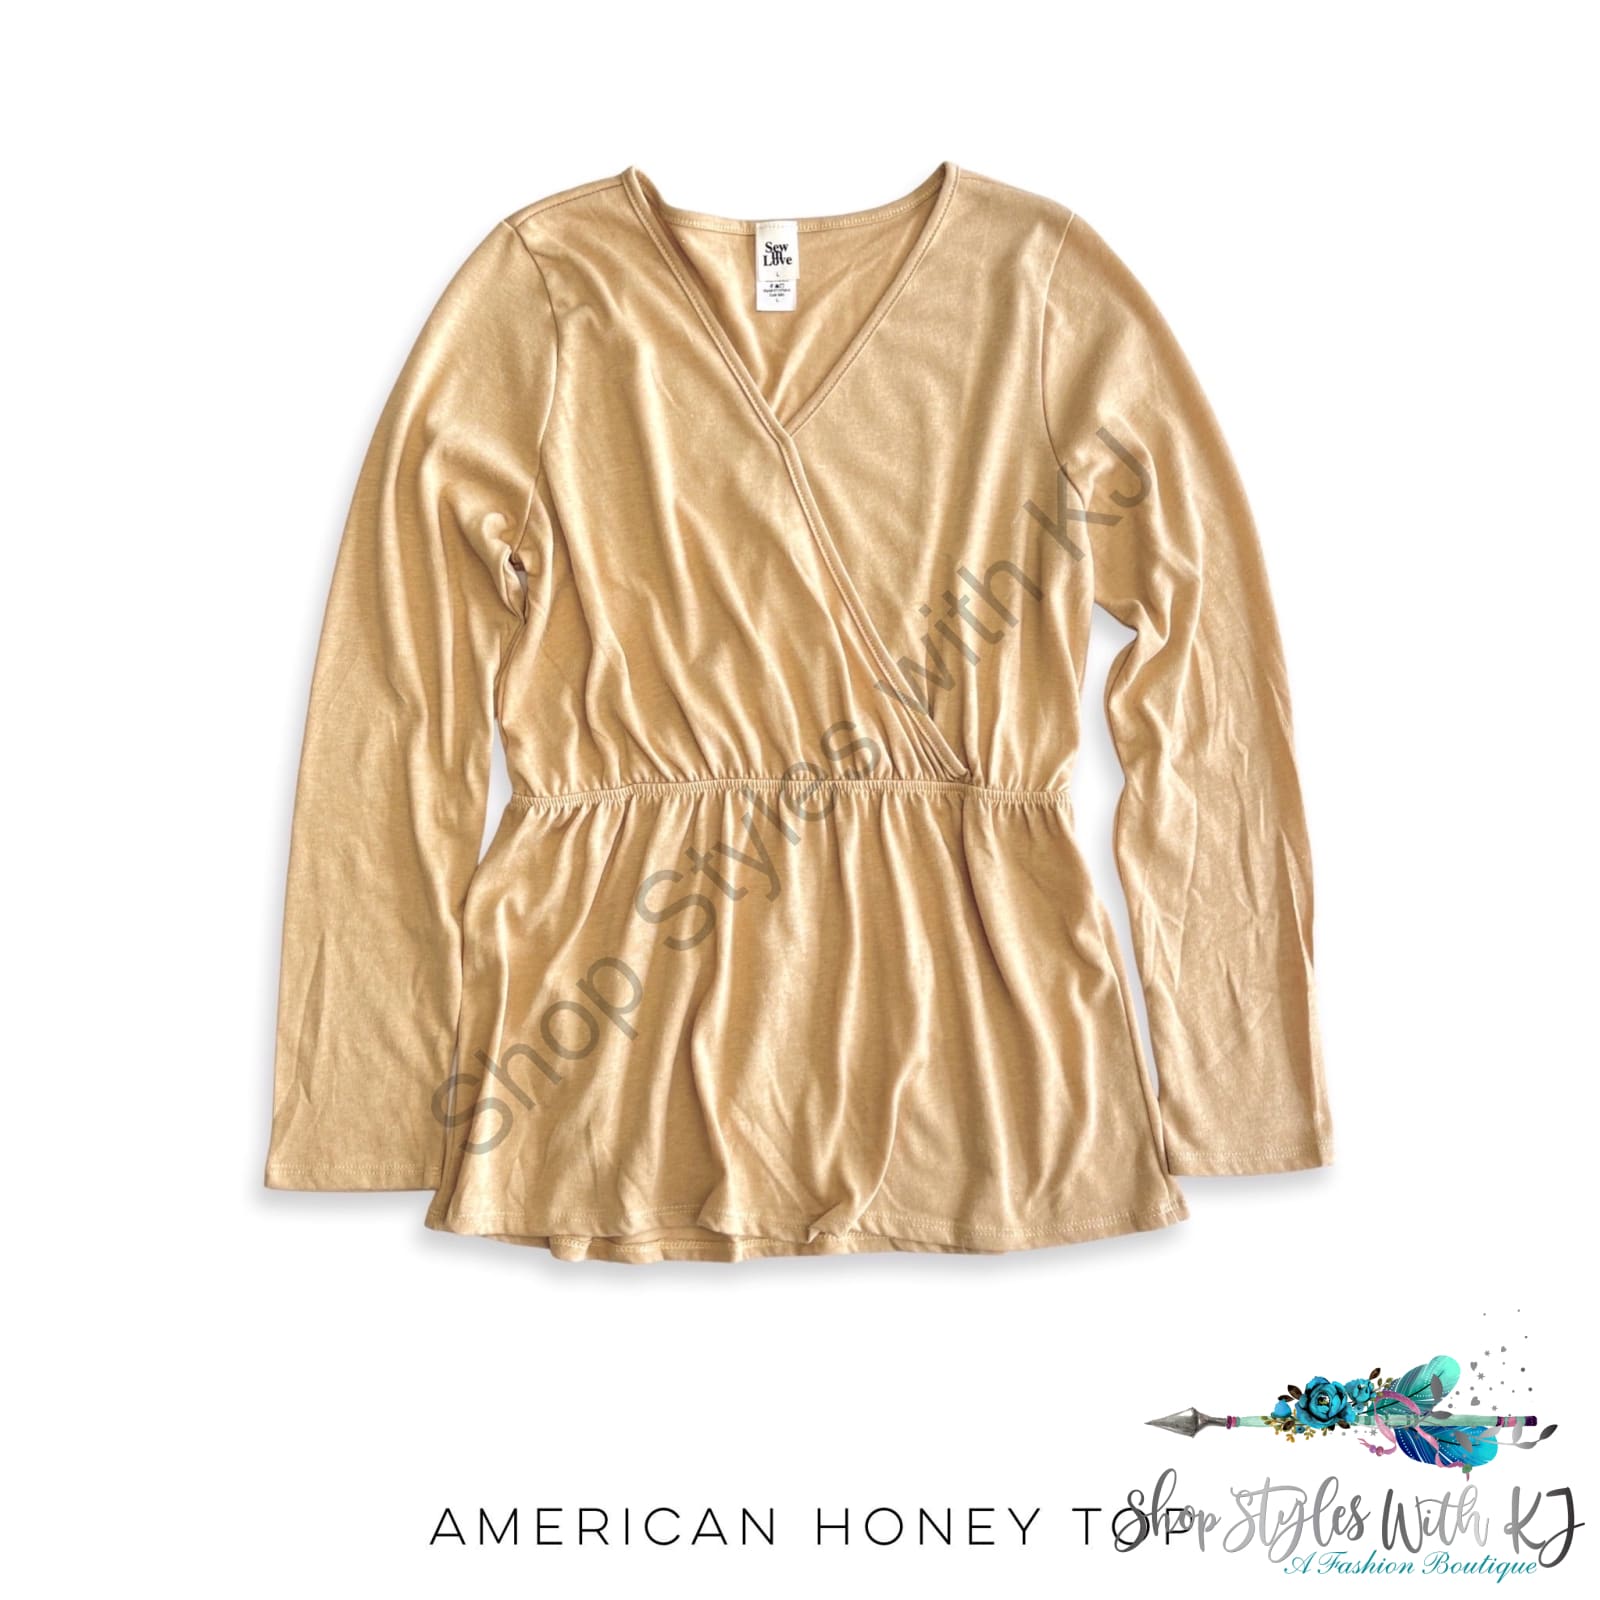 American Honey Top Sew In Love